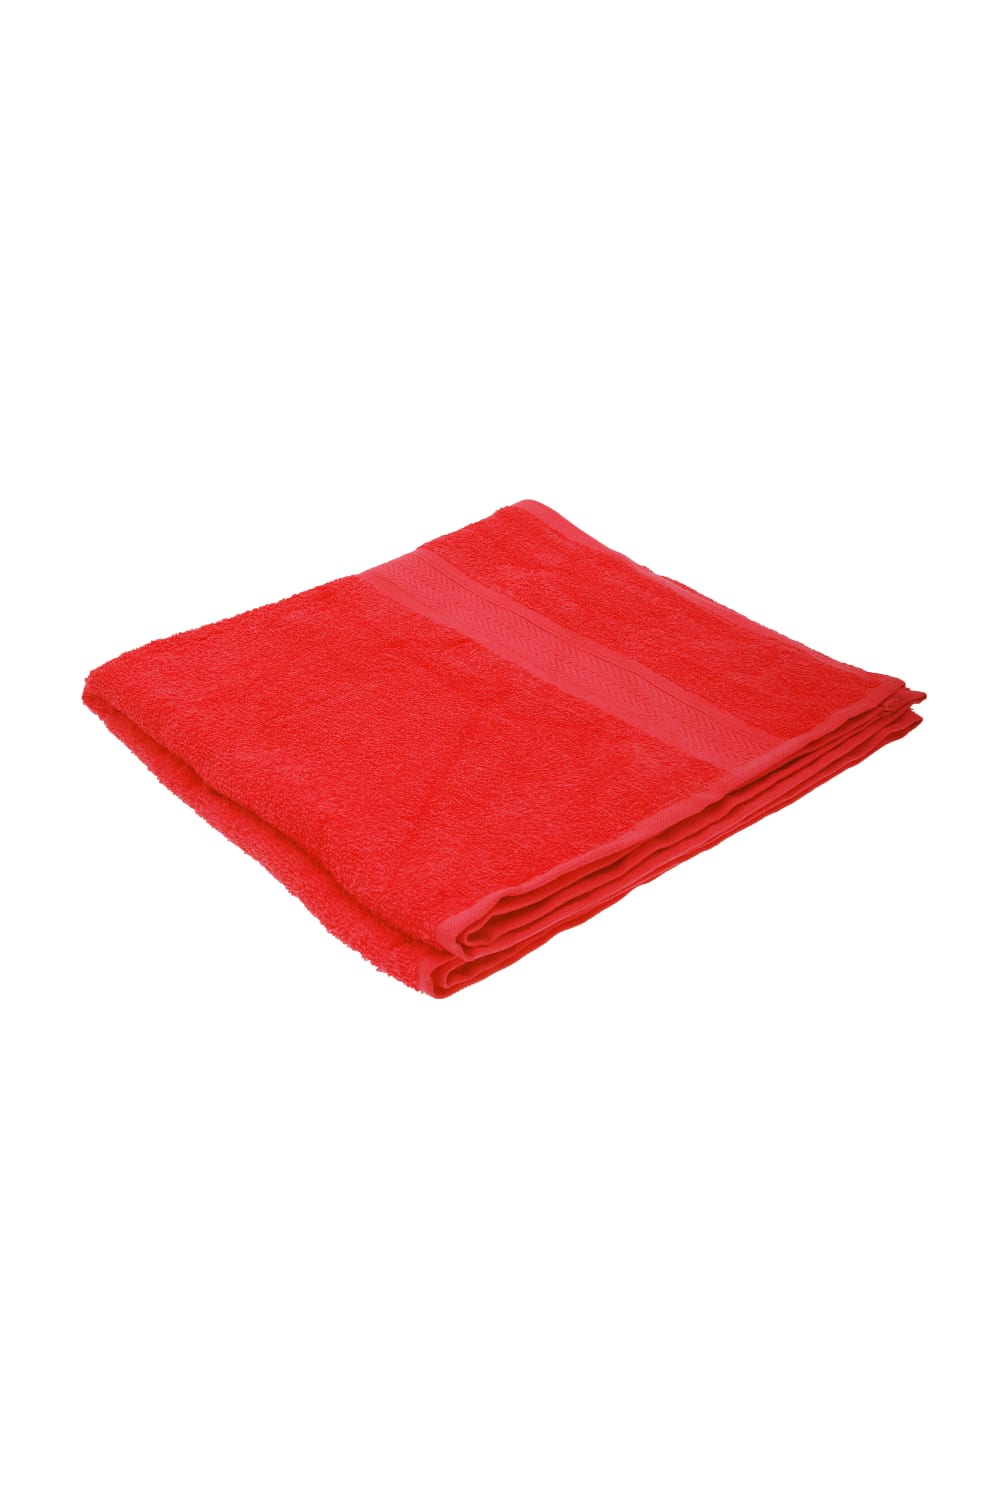 Jassz Plain Bath Towel  (Pack of 2) (Red) (One Size)